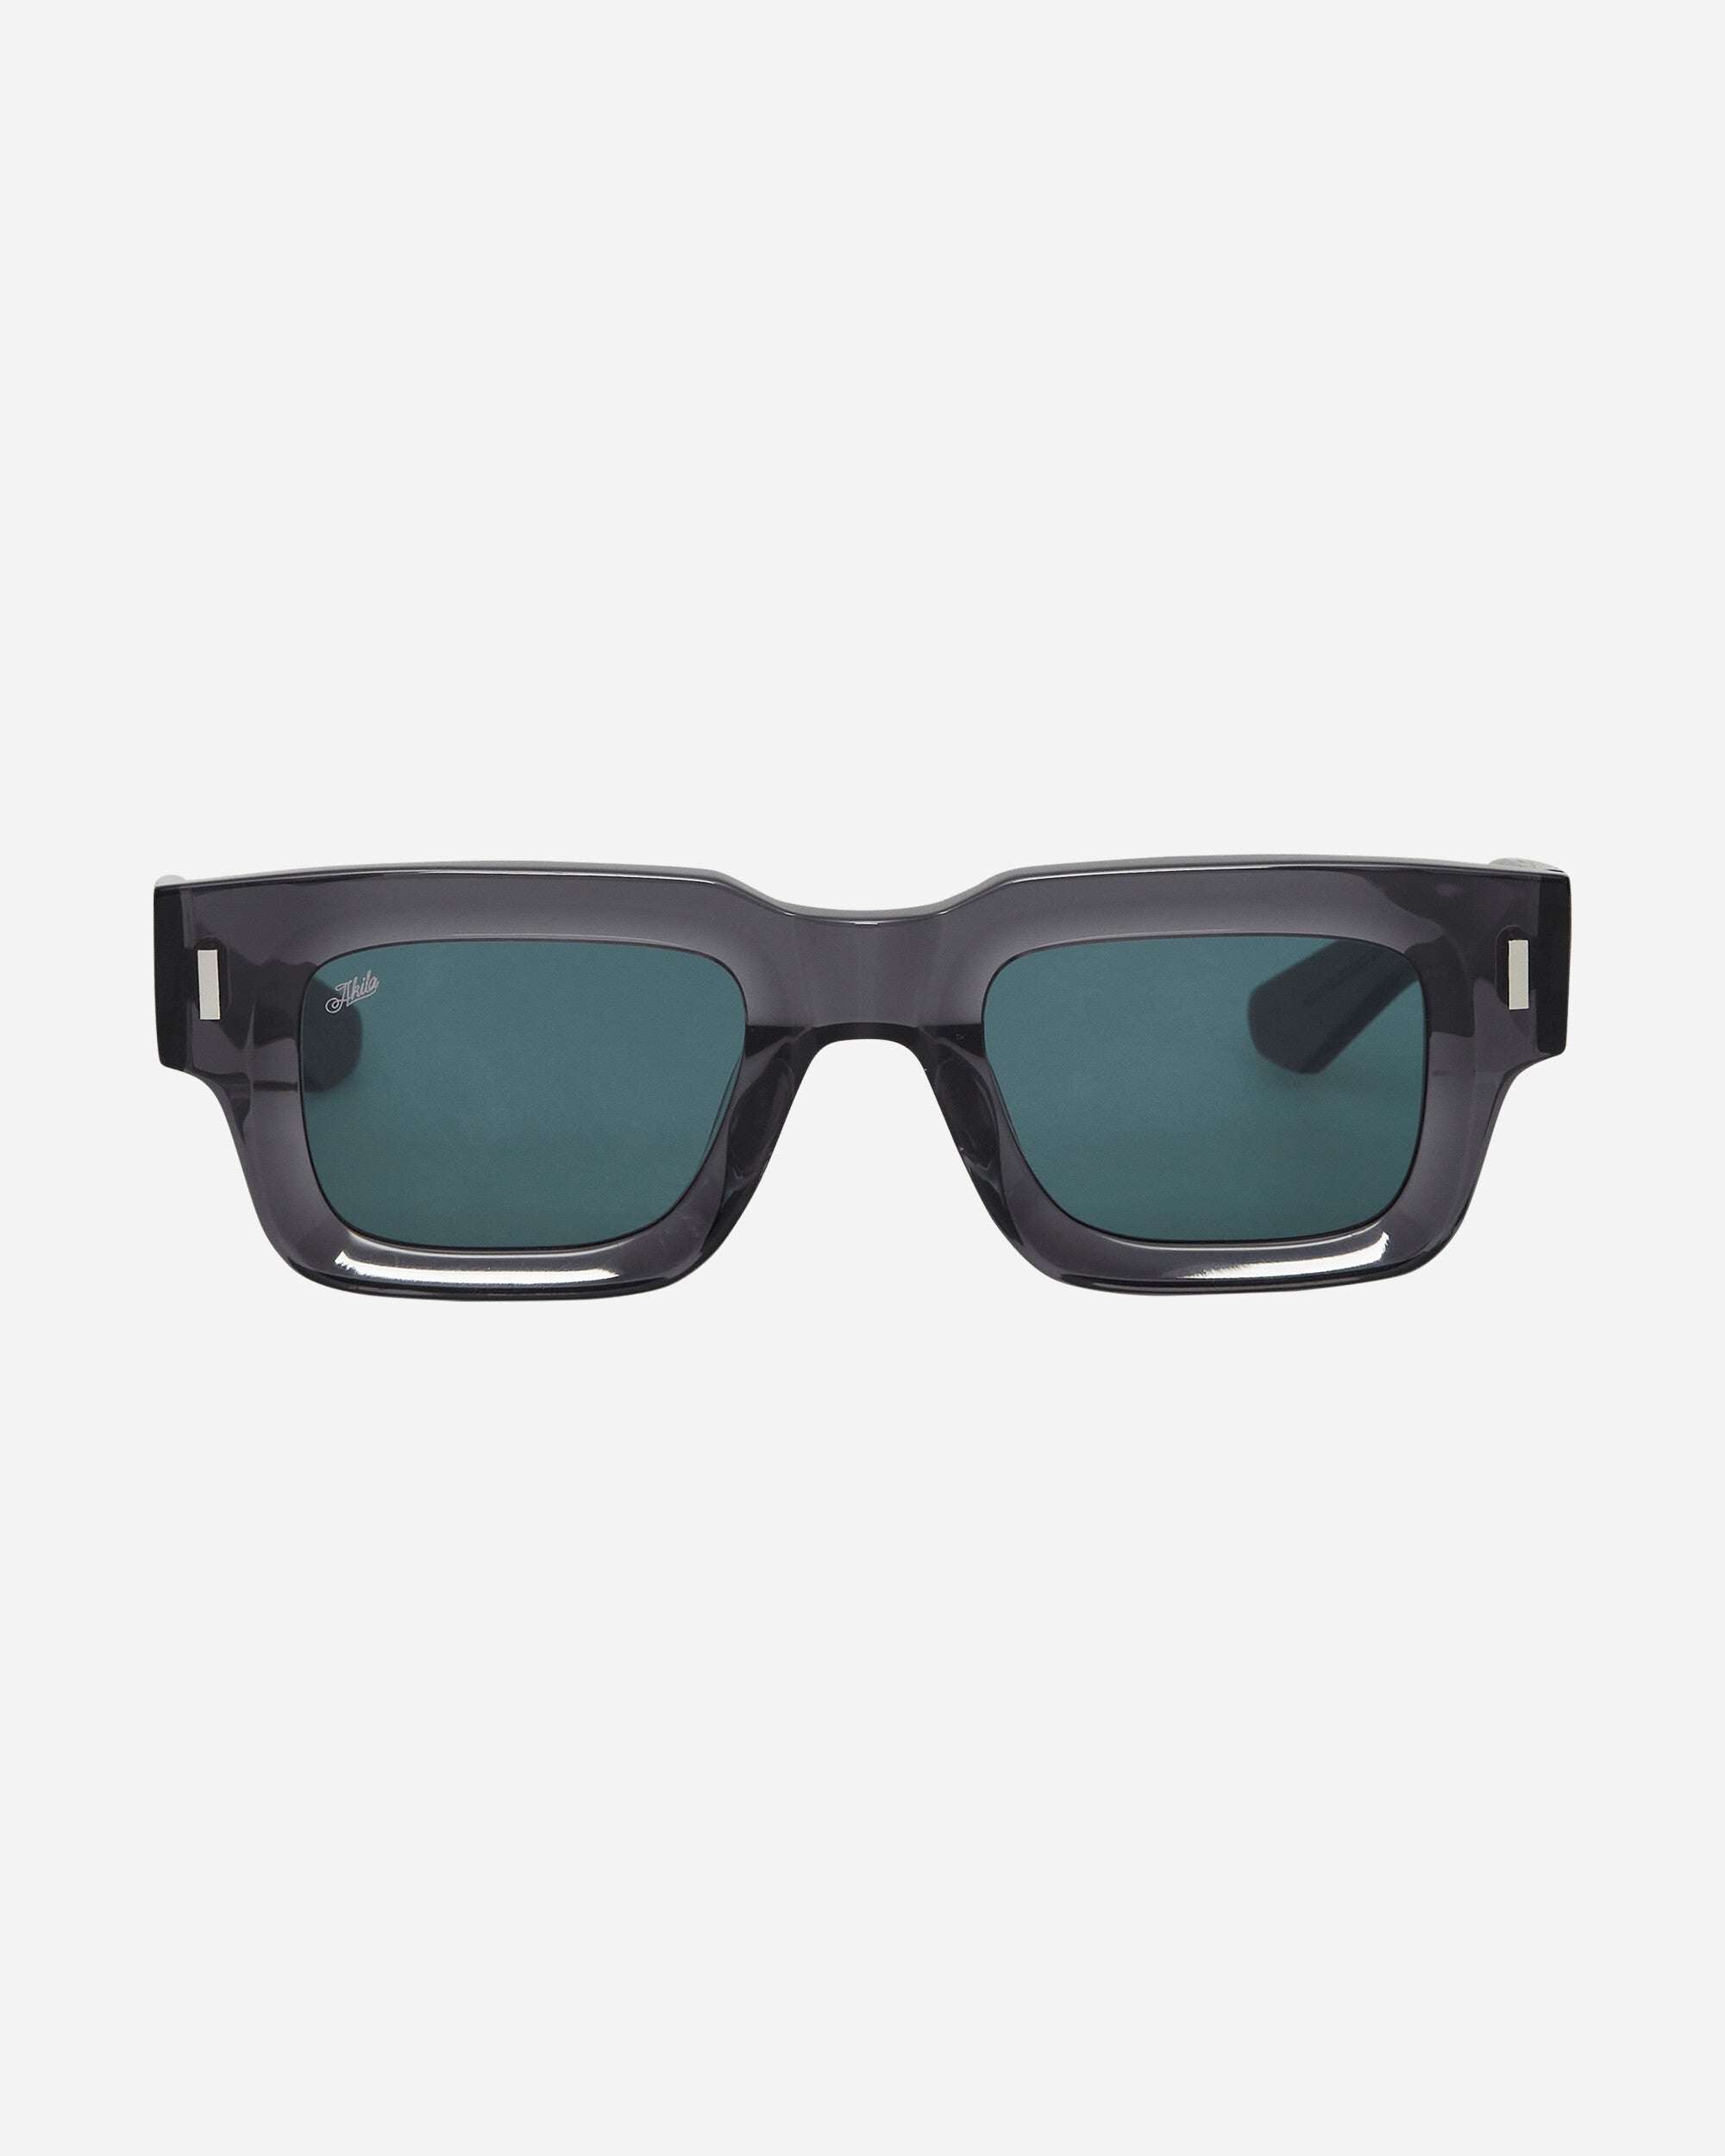 AKILA Ares Cement/Viridian Eyewear Sunglasses 212504 36